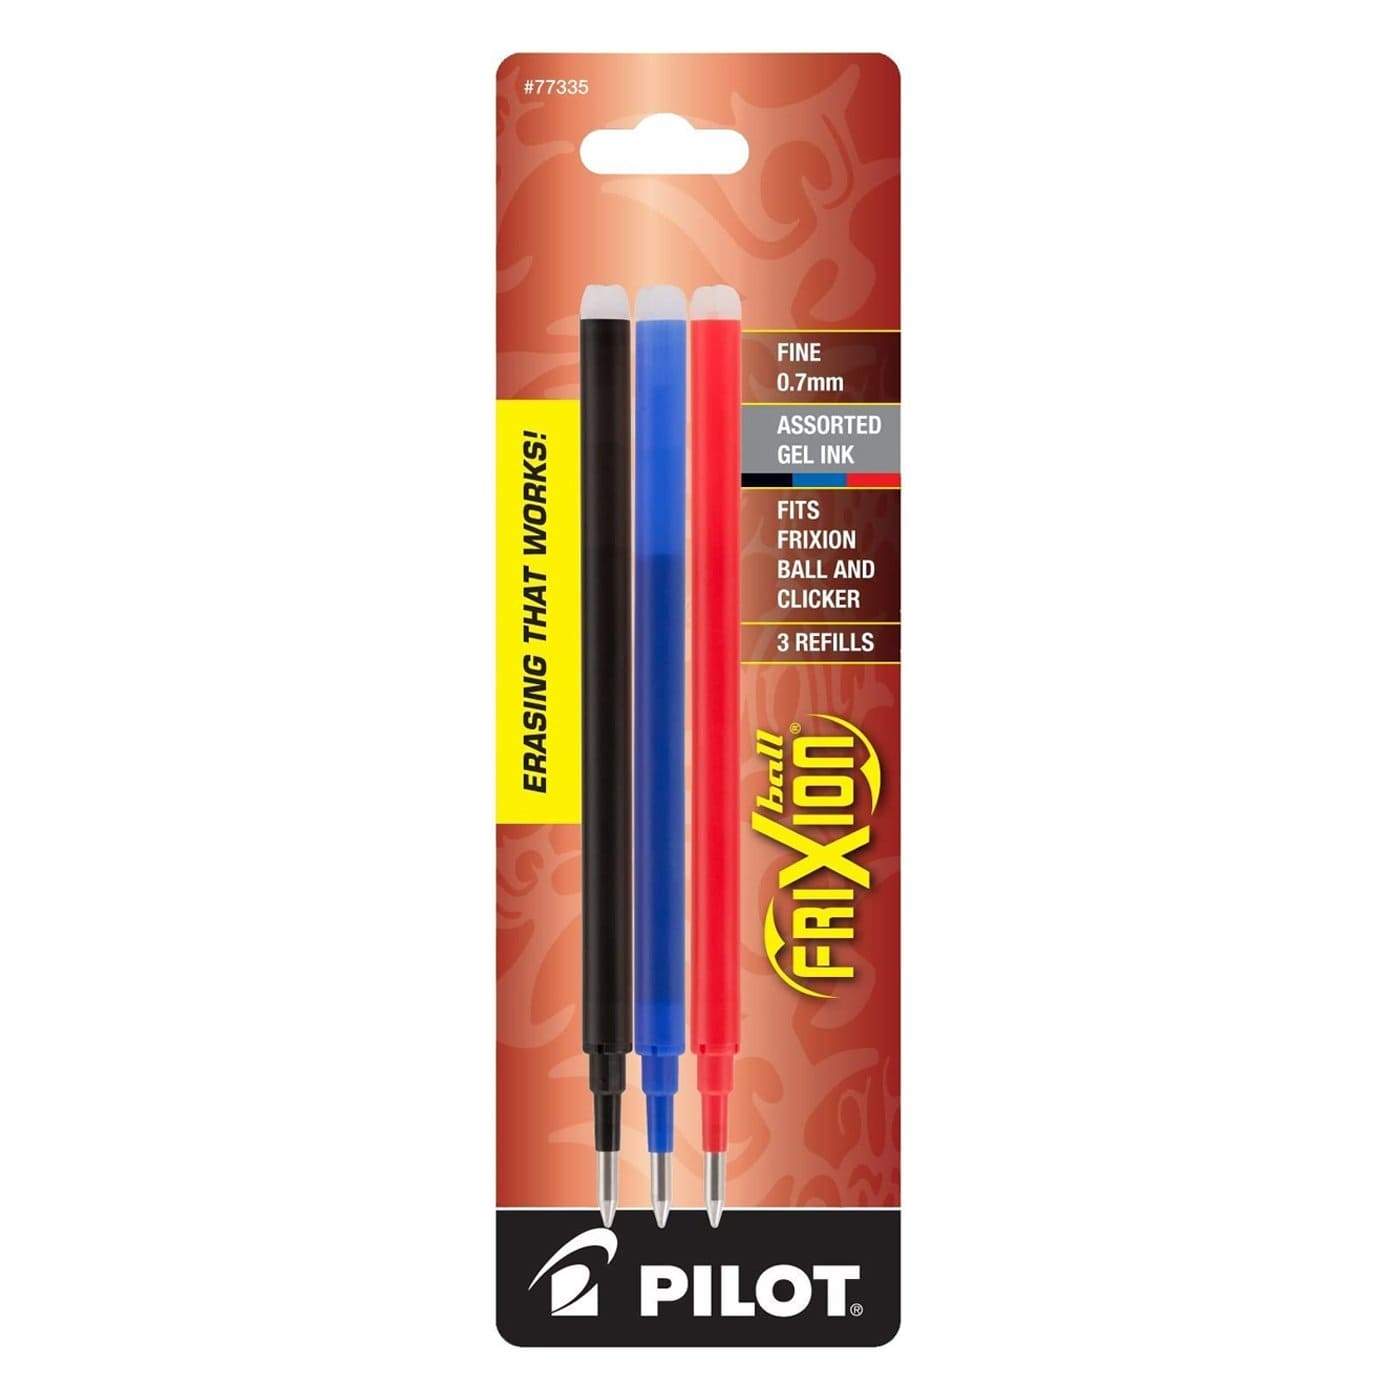 Pilot Frixion Erasable Rollerball Pen Assorted Set of 15